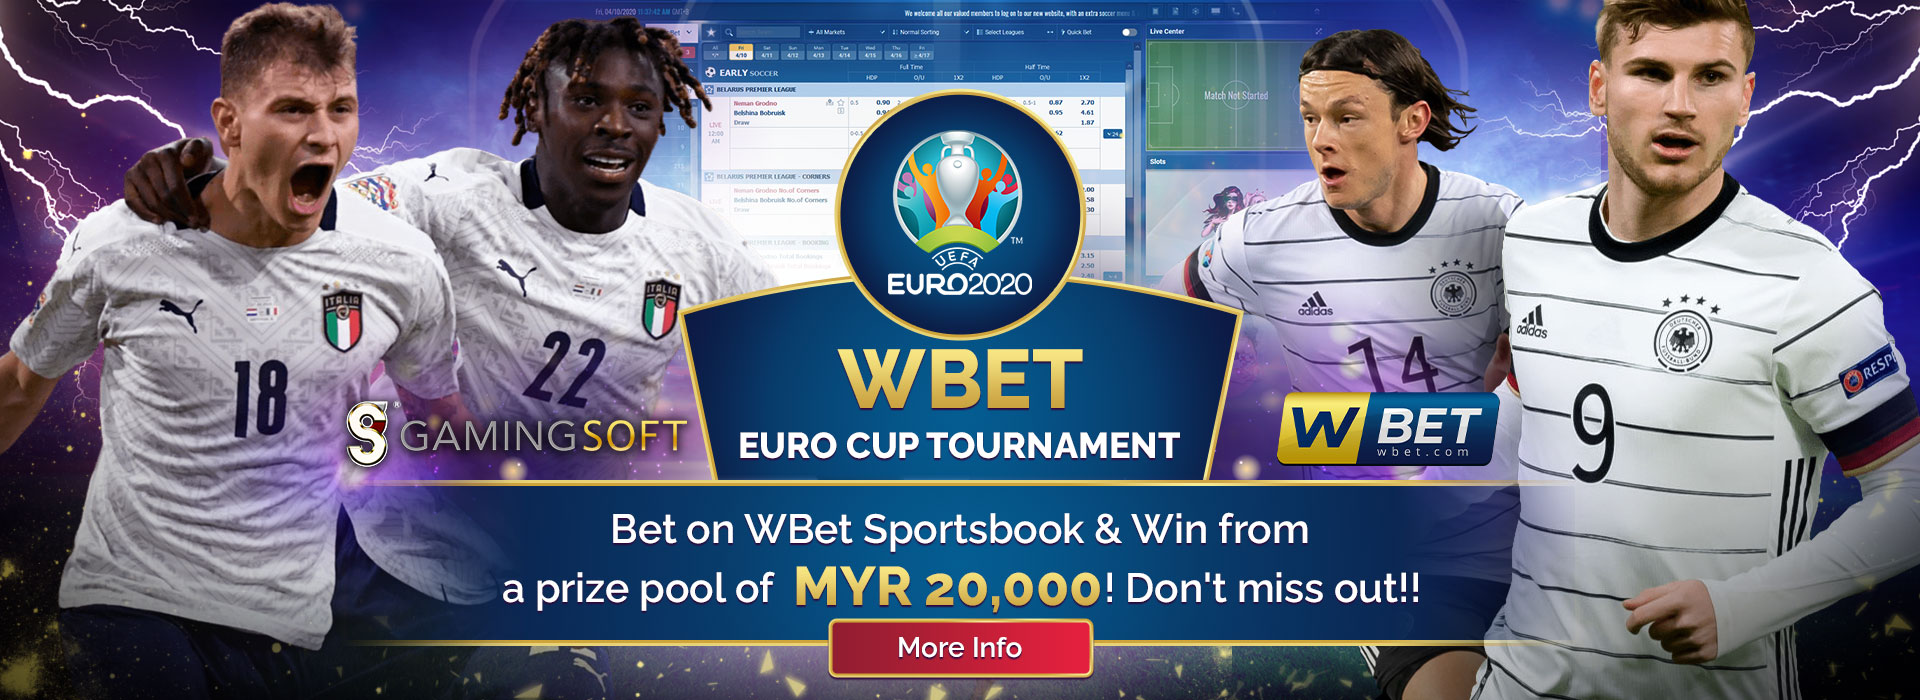 WBet Euro Cup Tournament